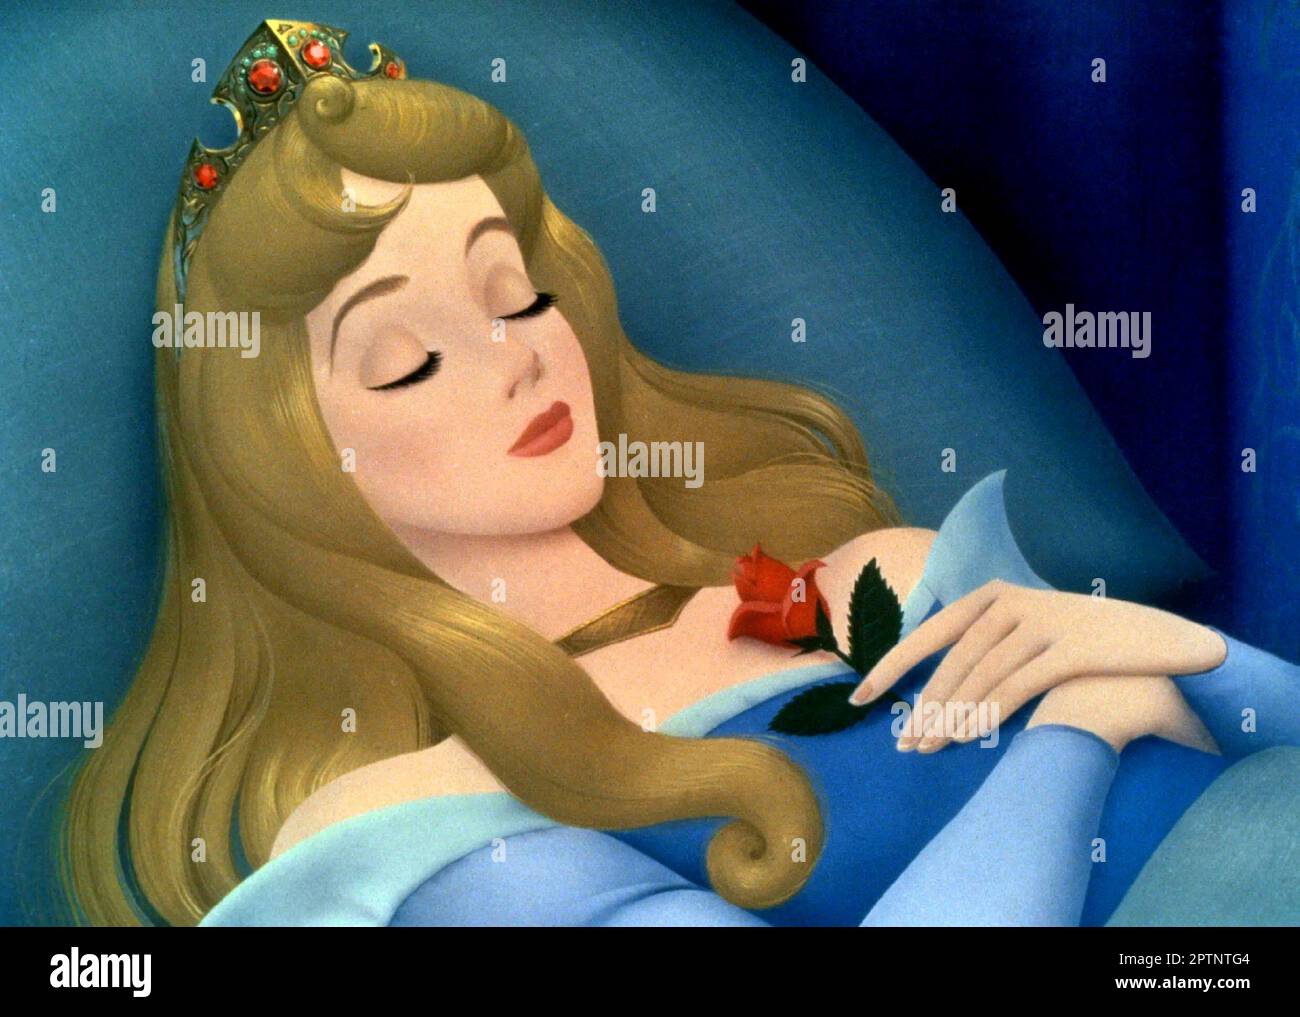 PRINCESS AURORA, SLEEPING BEAUTY, 1959 Stock Photo - Alamy